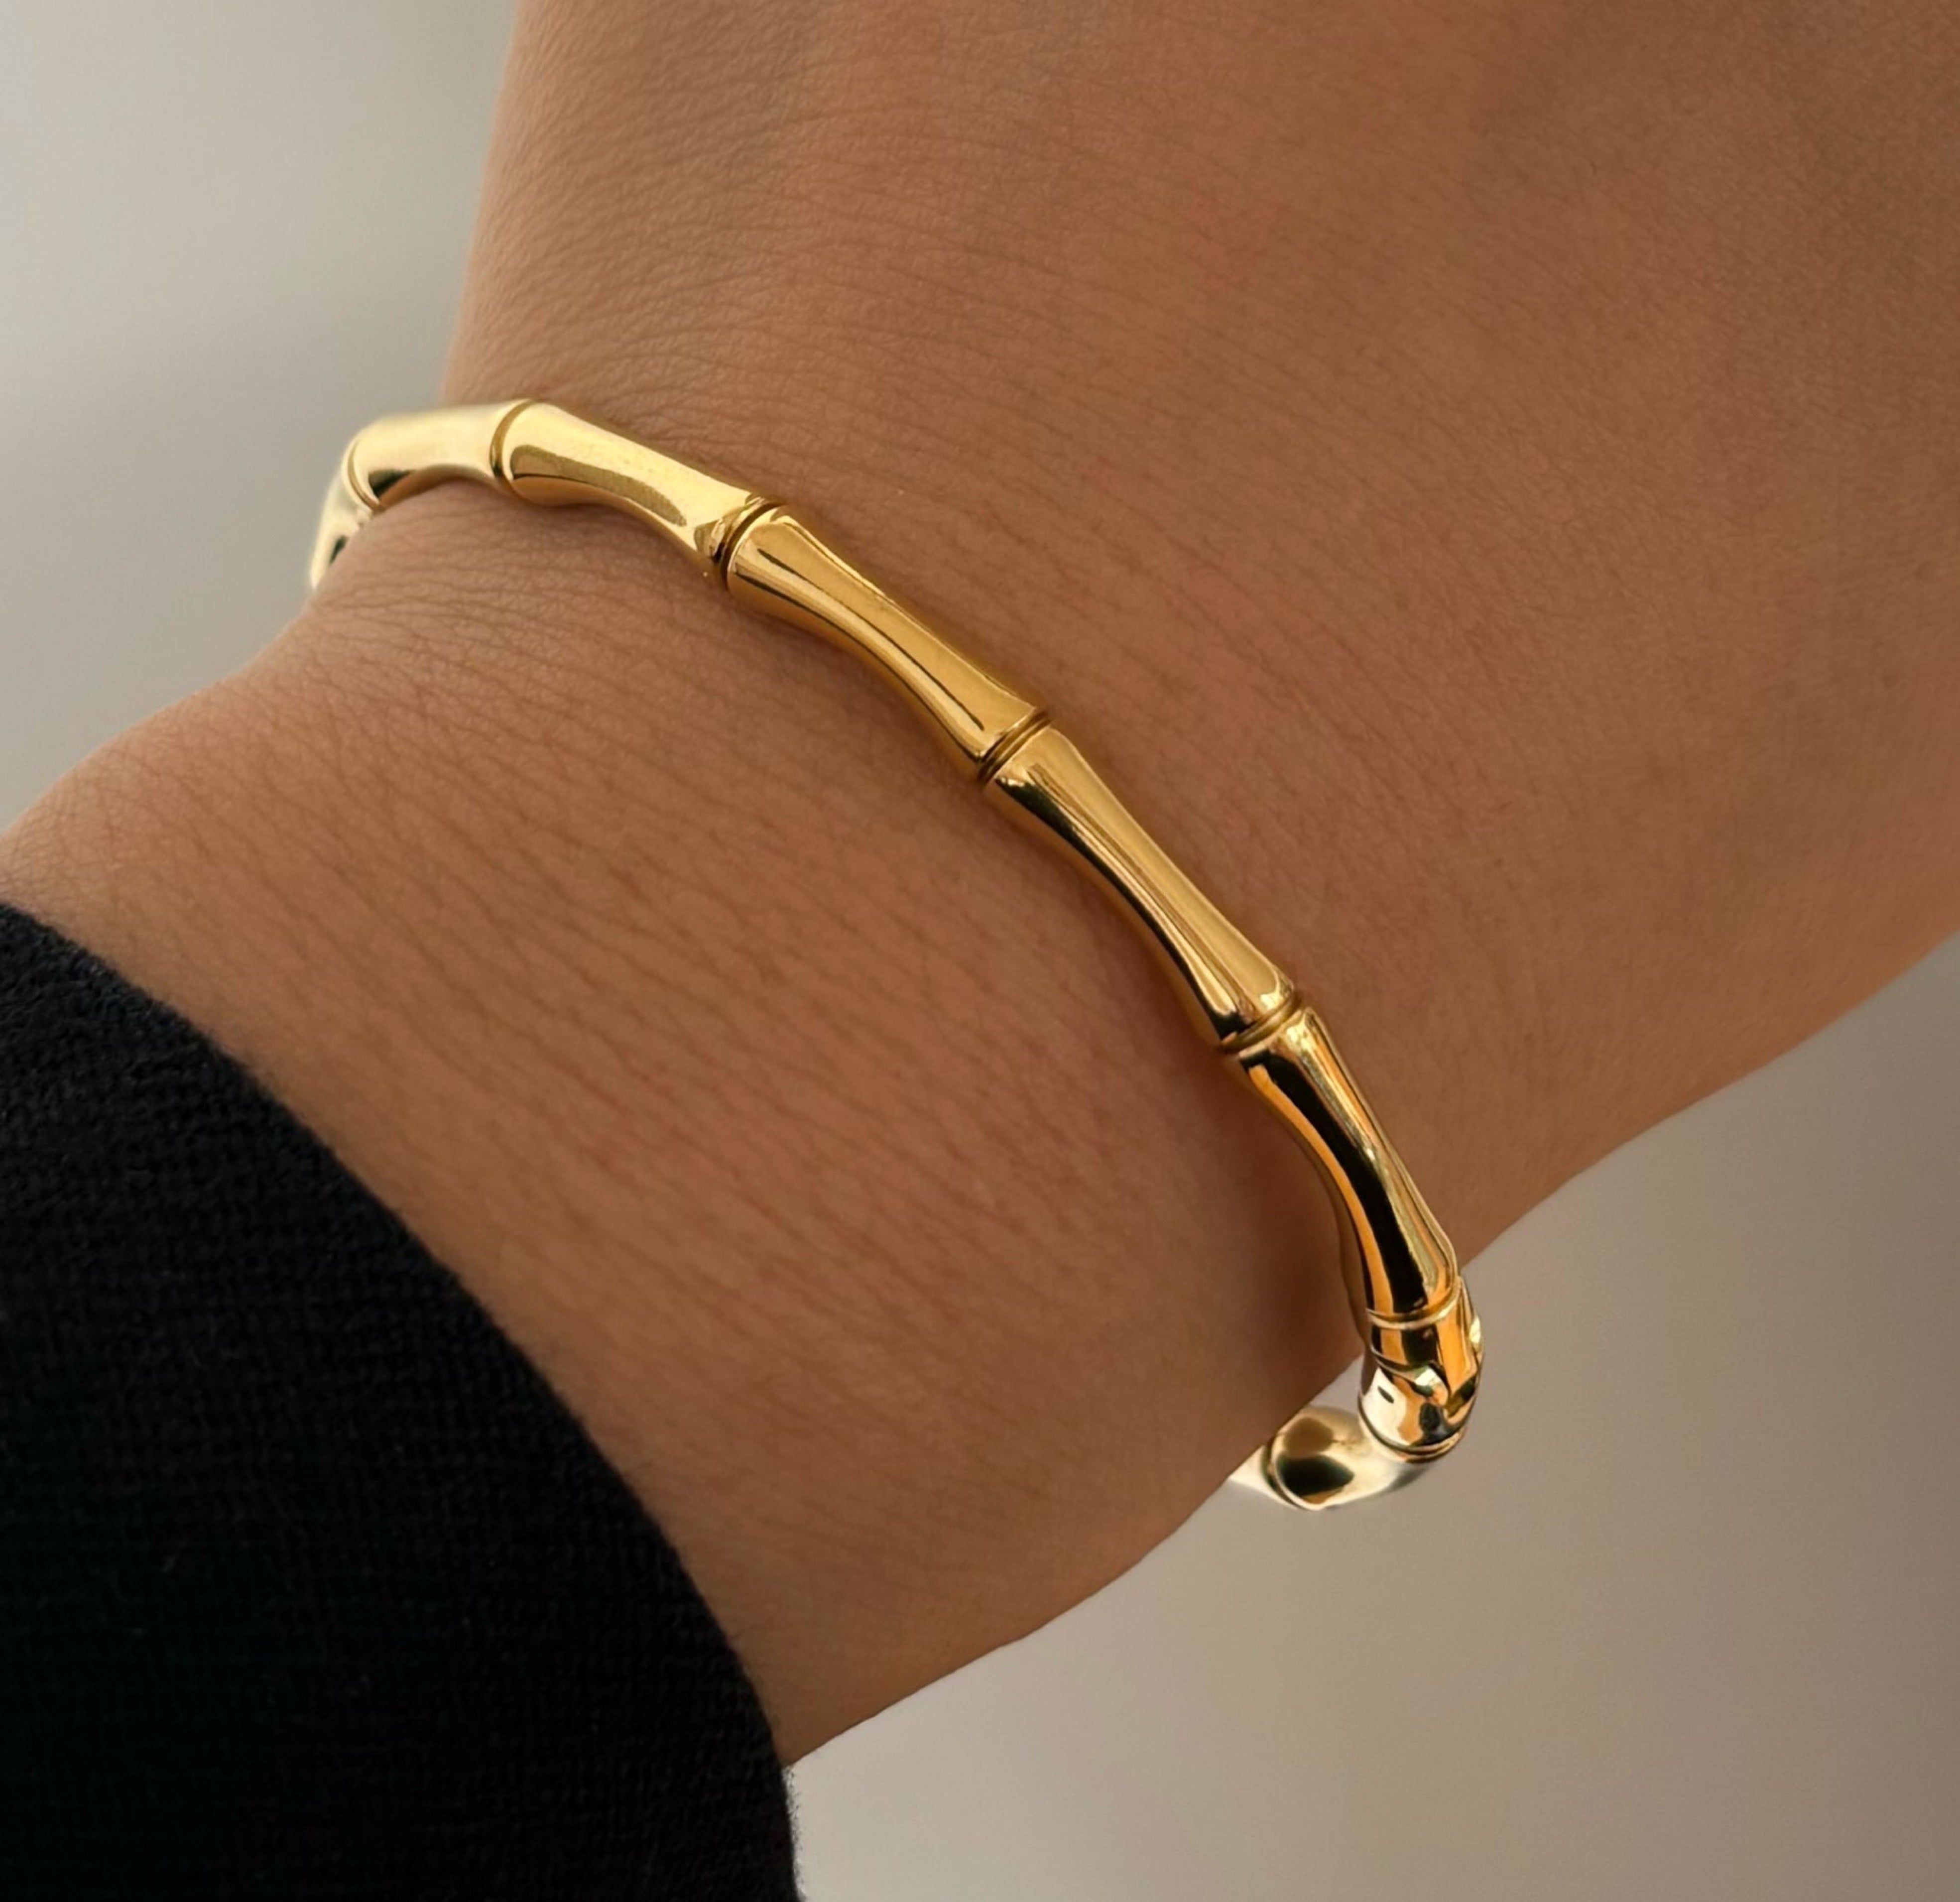 gold bamboo cuff bracelet waterproof jewelry